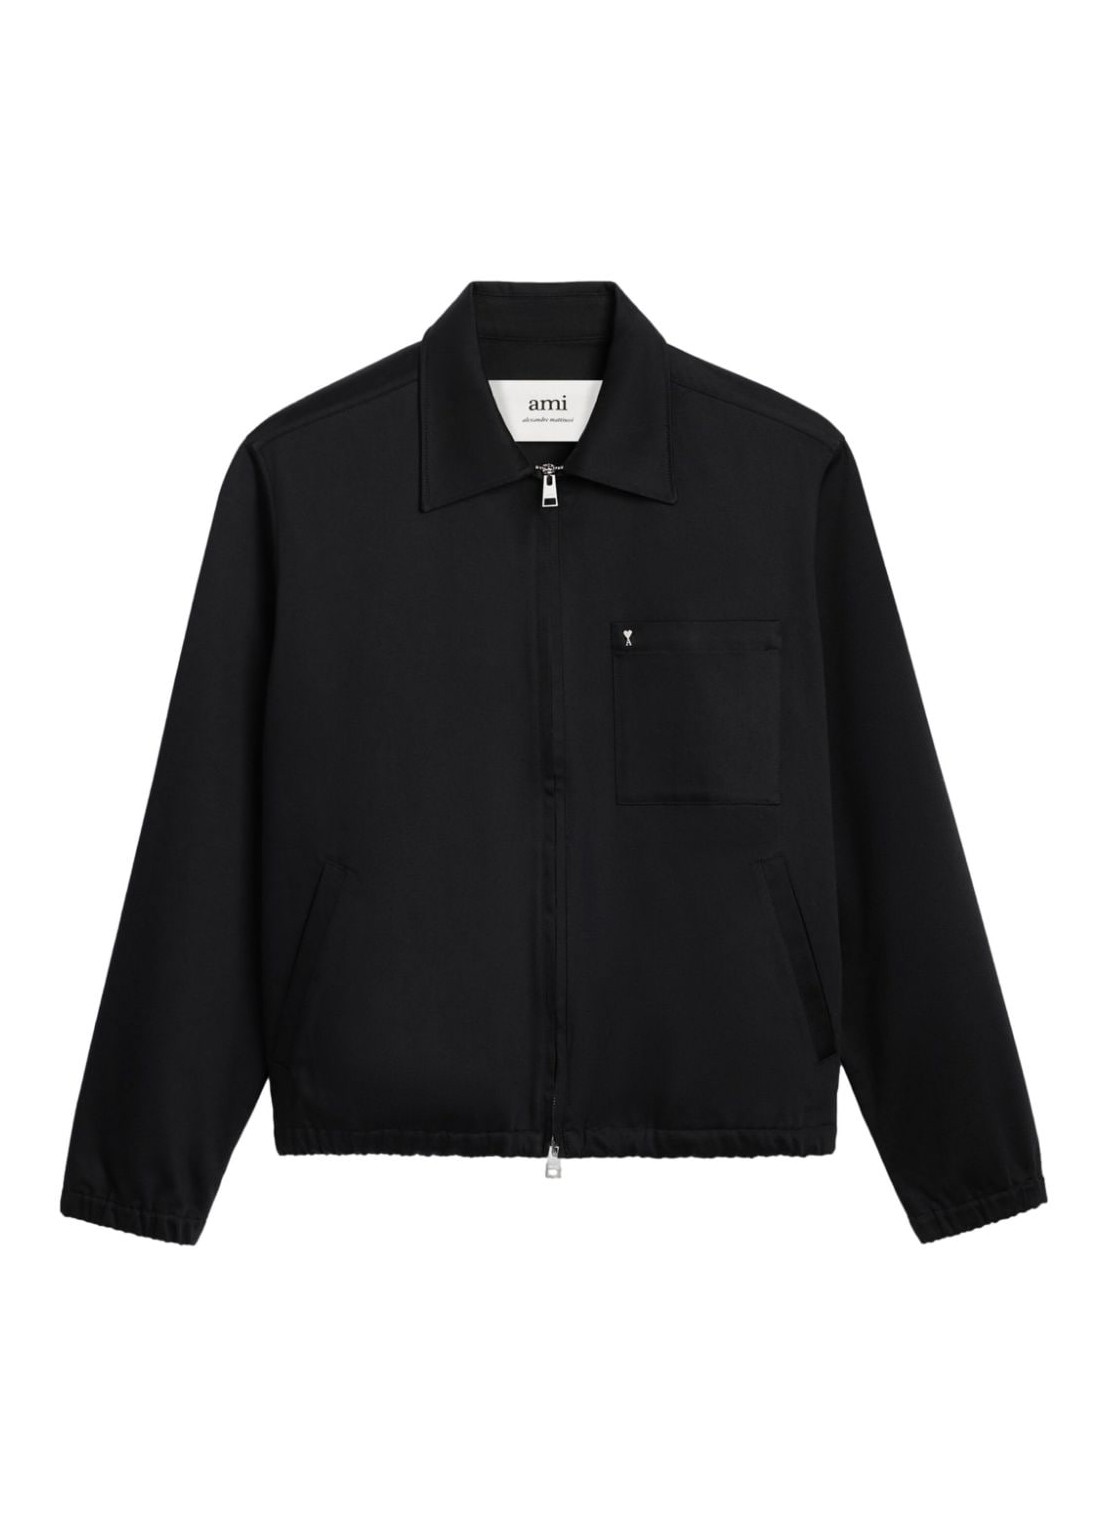 Outerwear ami outerwear manadc zipped jacket - hjk053co0009 001 talla S
 